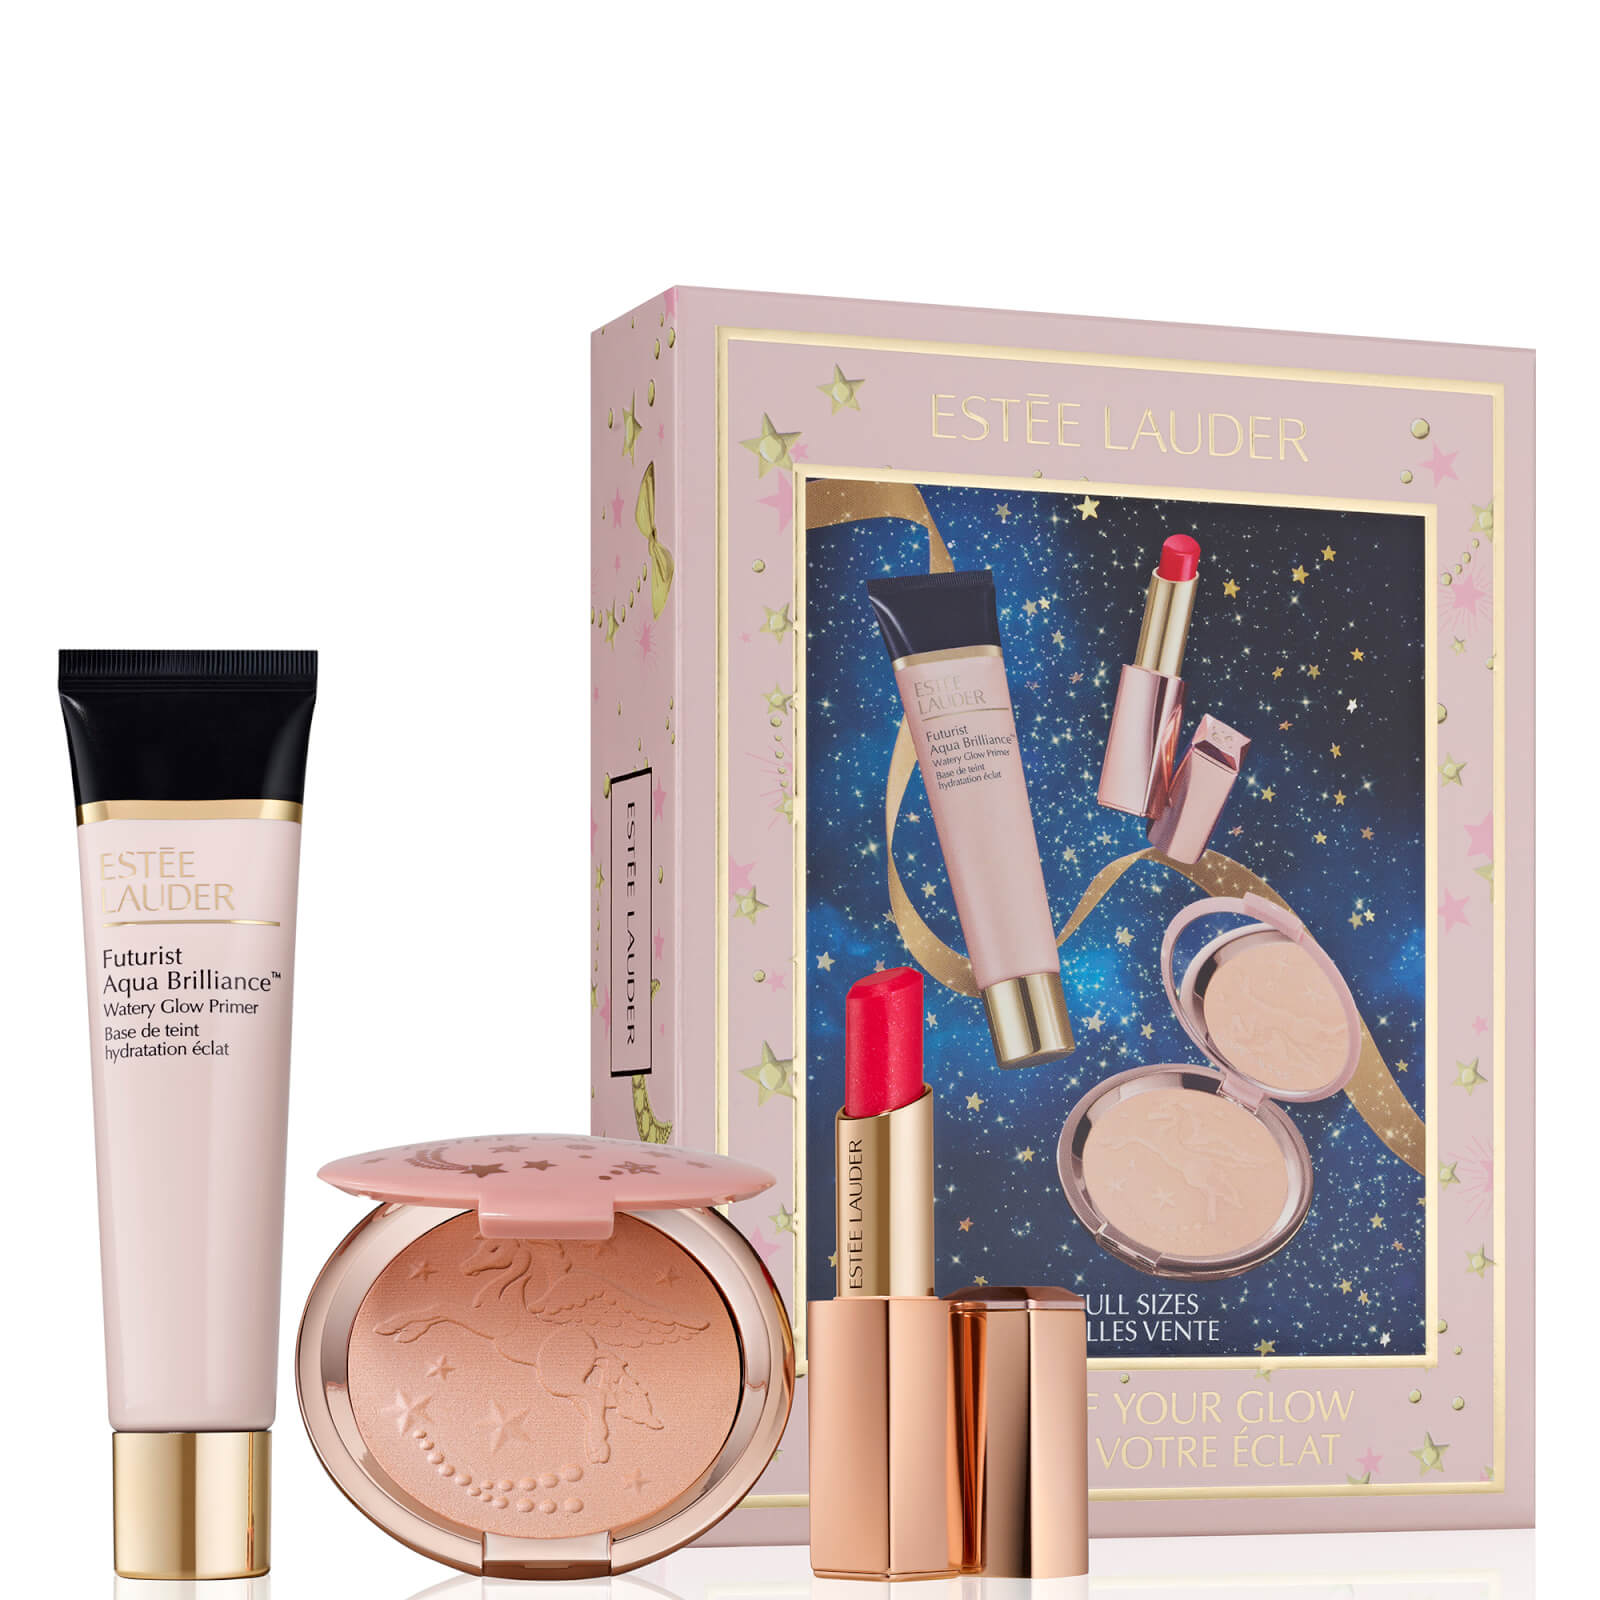 Estee Lauder Show off Your Glow Makeup Gift Set